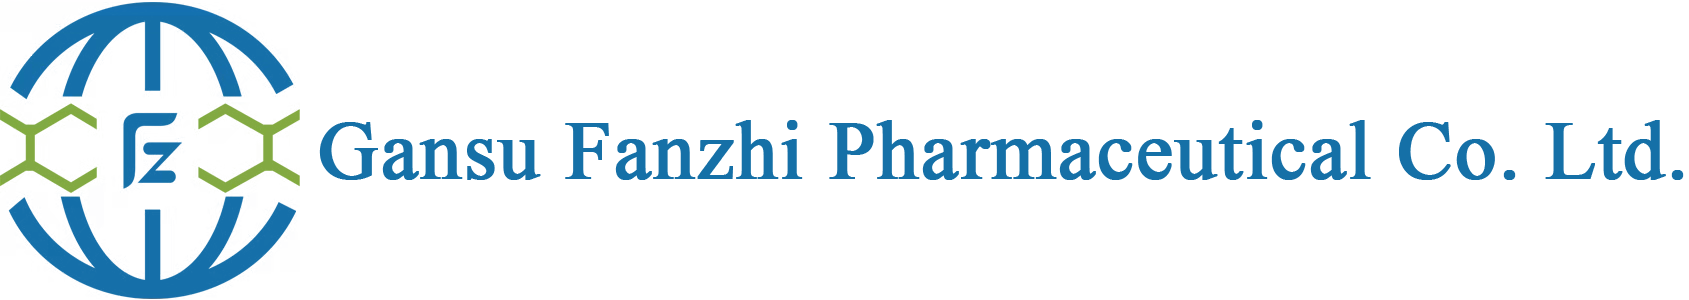 Gansu Fanzhi Pharmaceutical Co., Ltd.